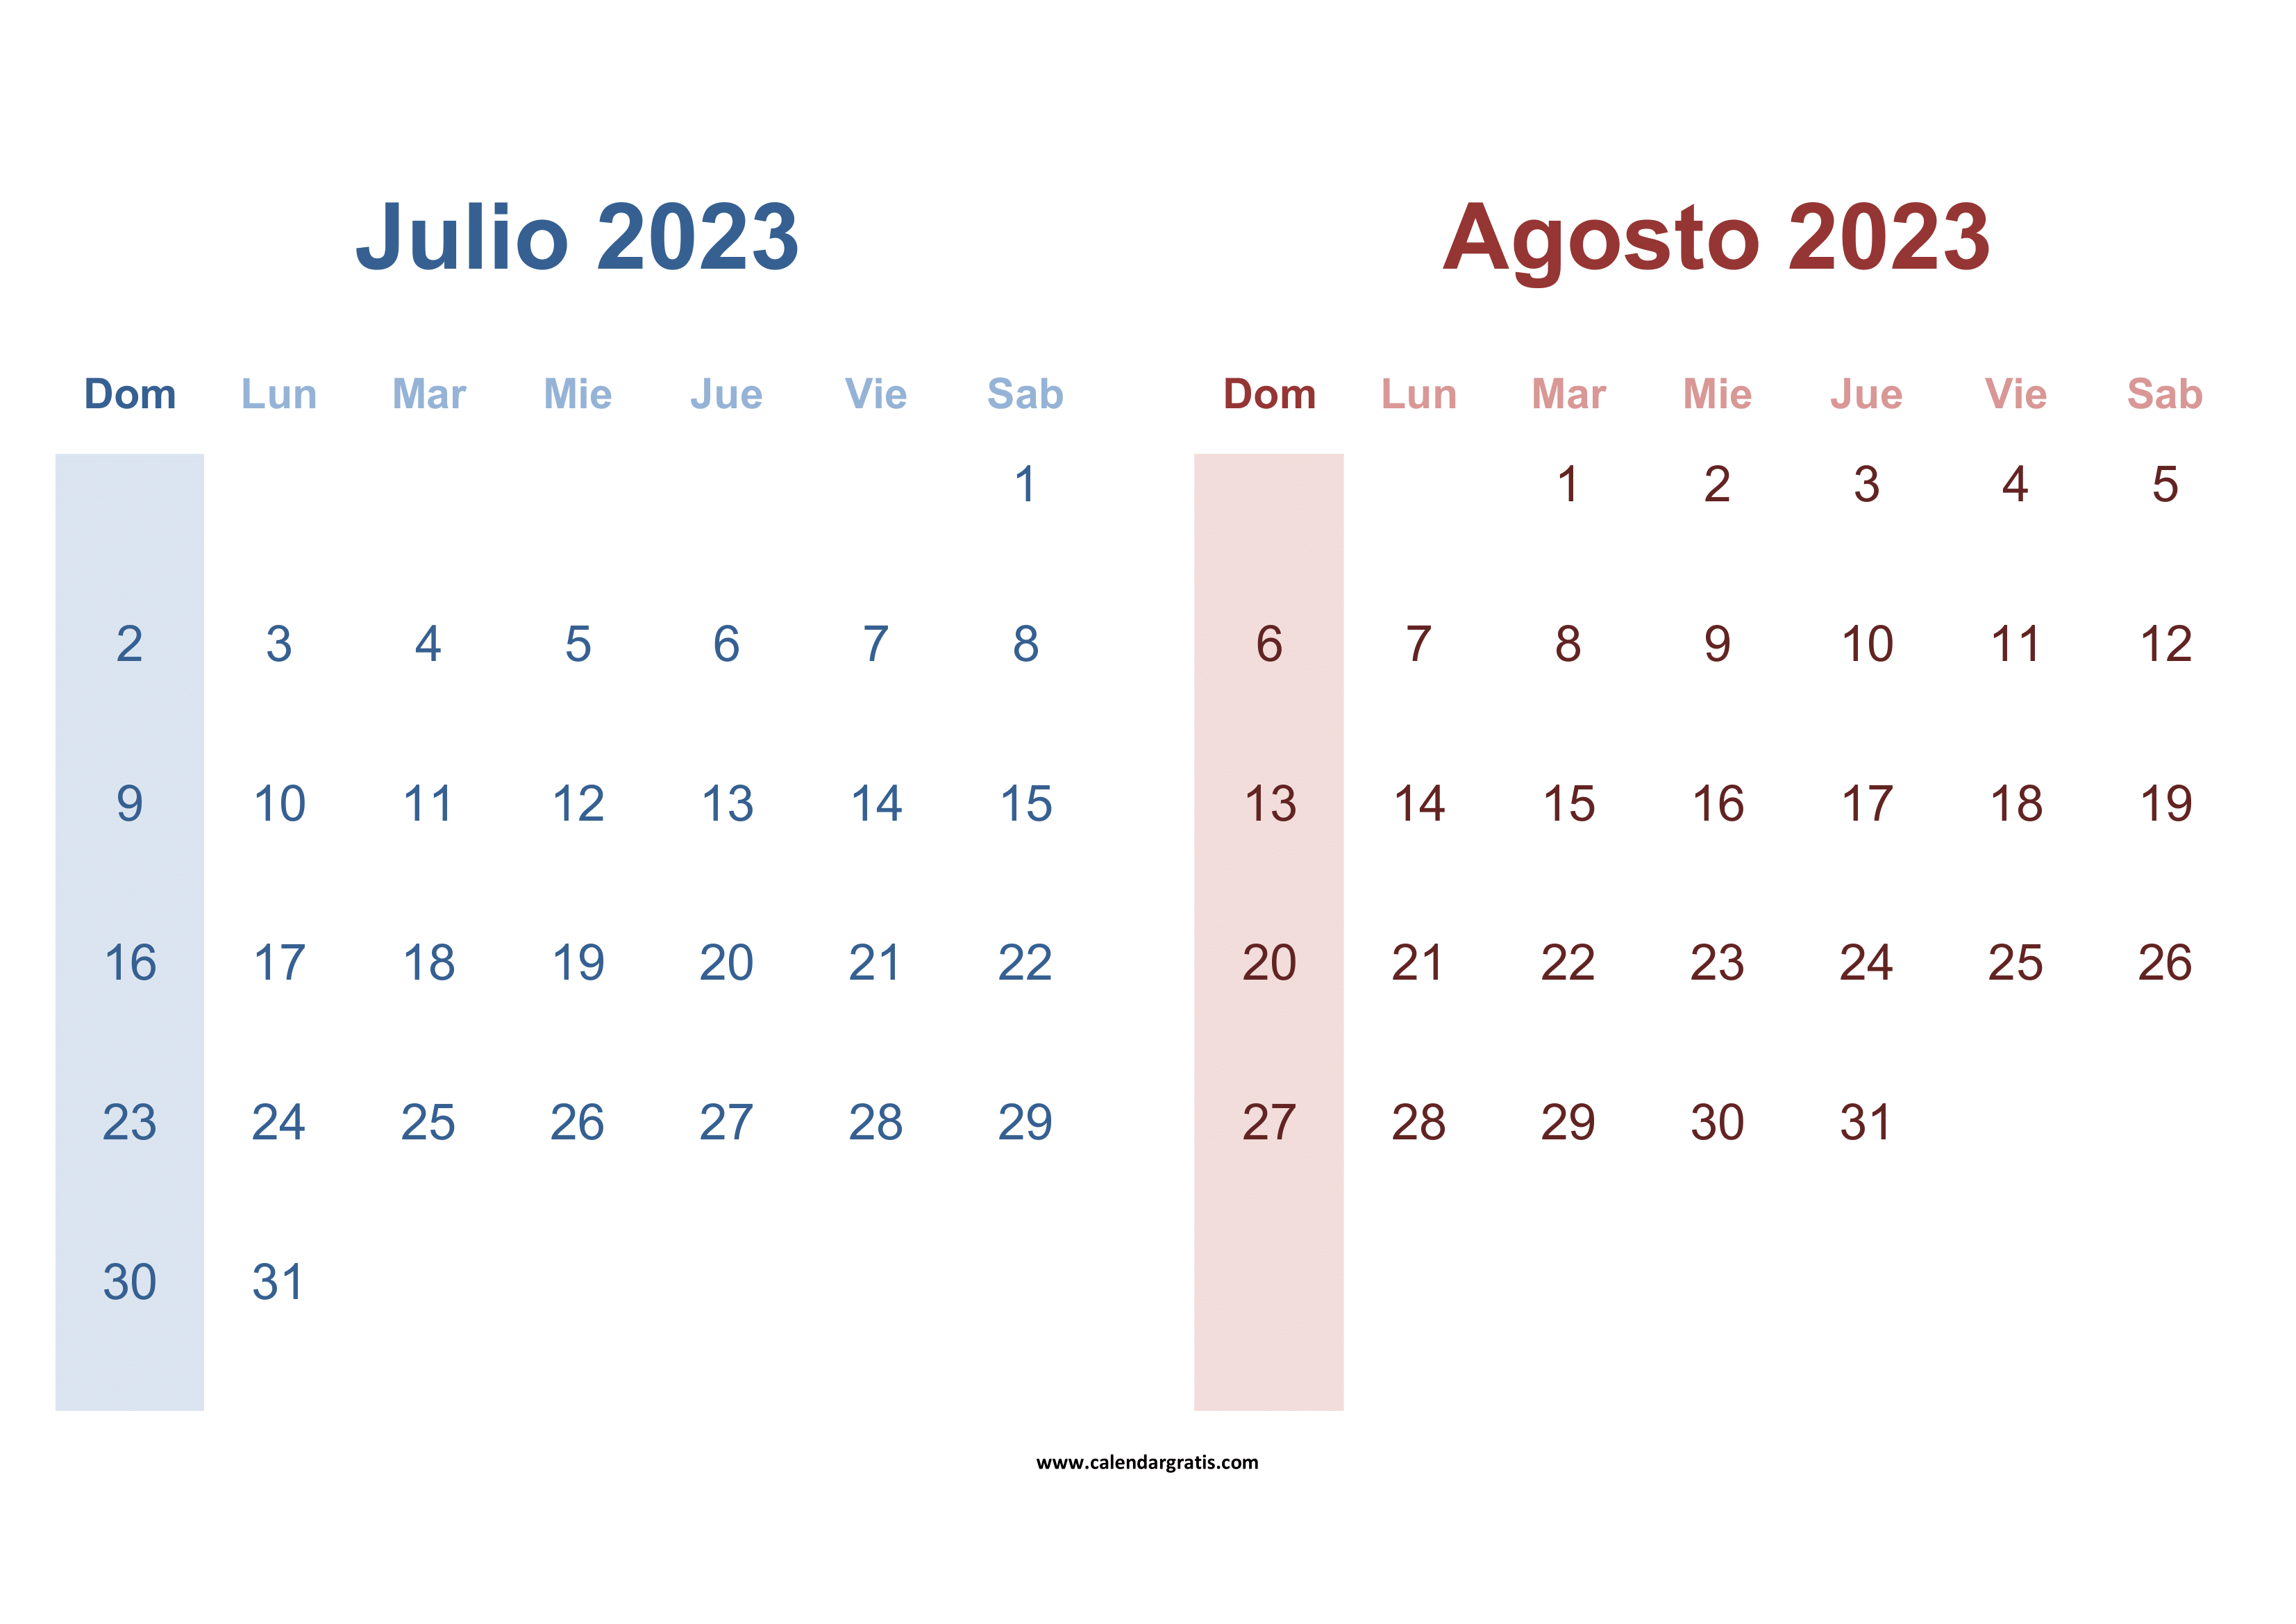 Calendario Julio y Agosto 2023 - un calendario de dos meses imprimible 